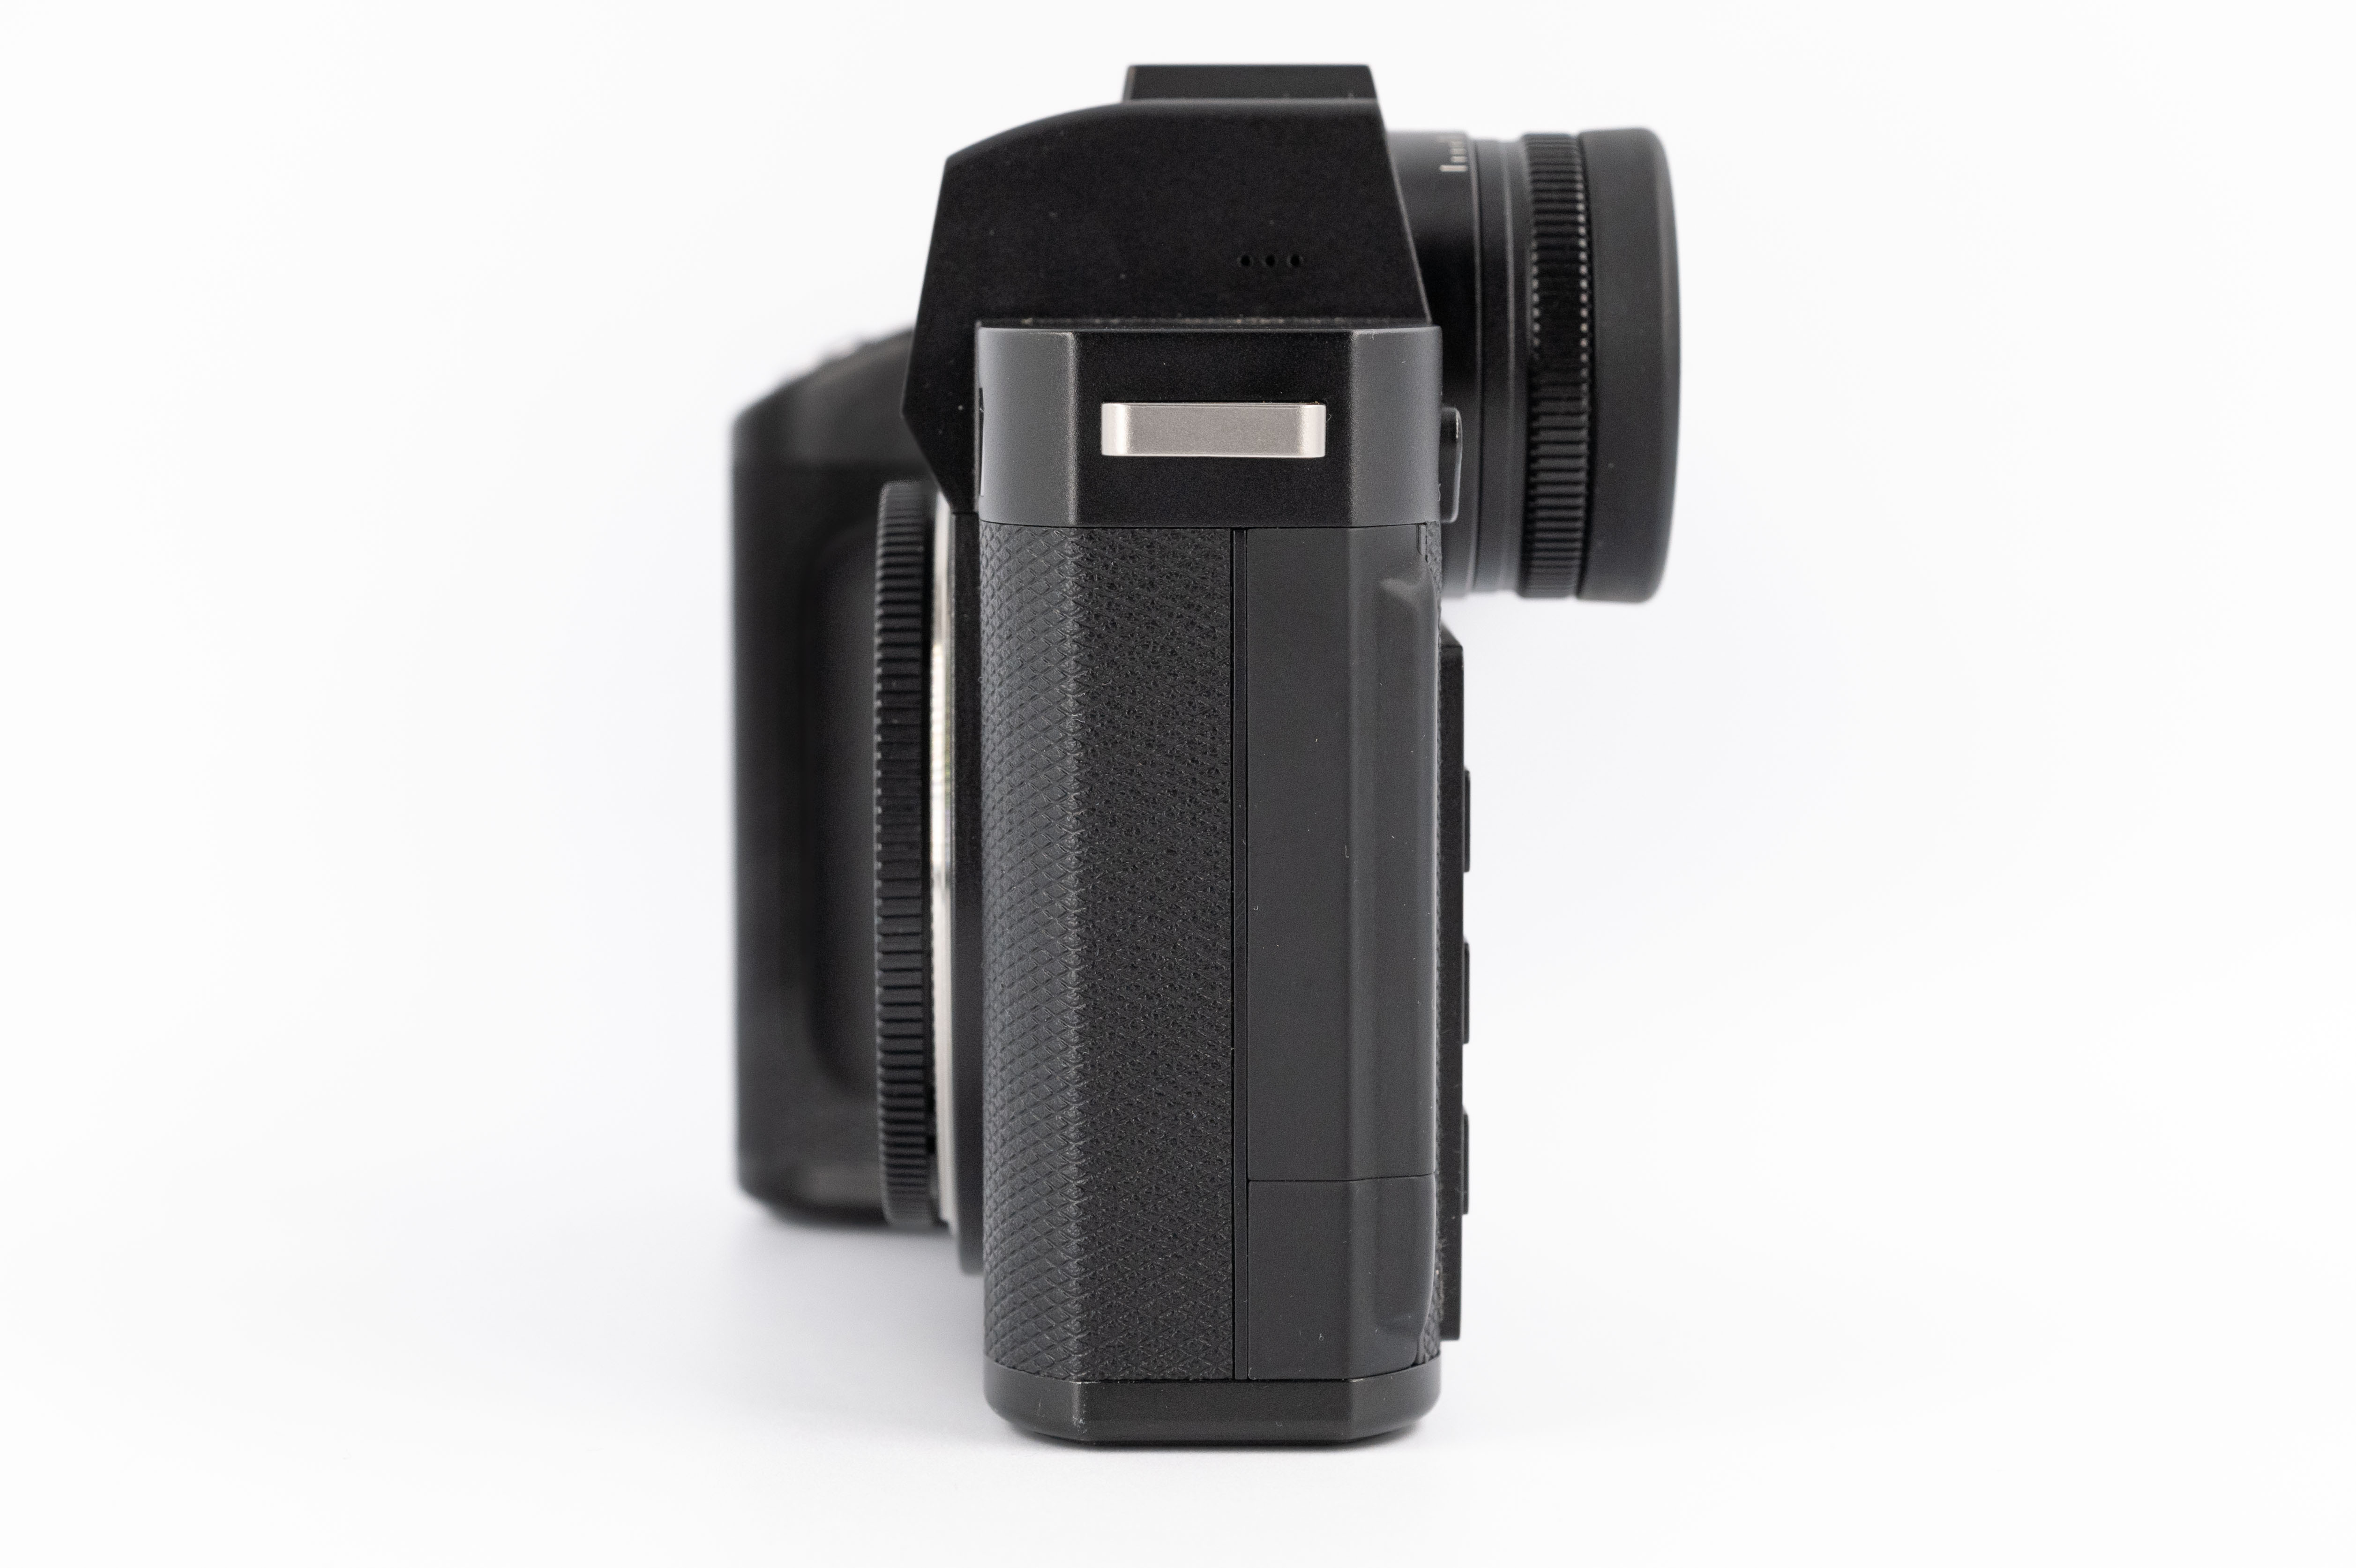 Leica SL2 Black 10854